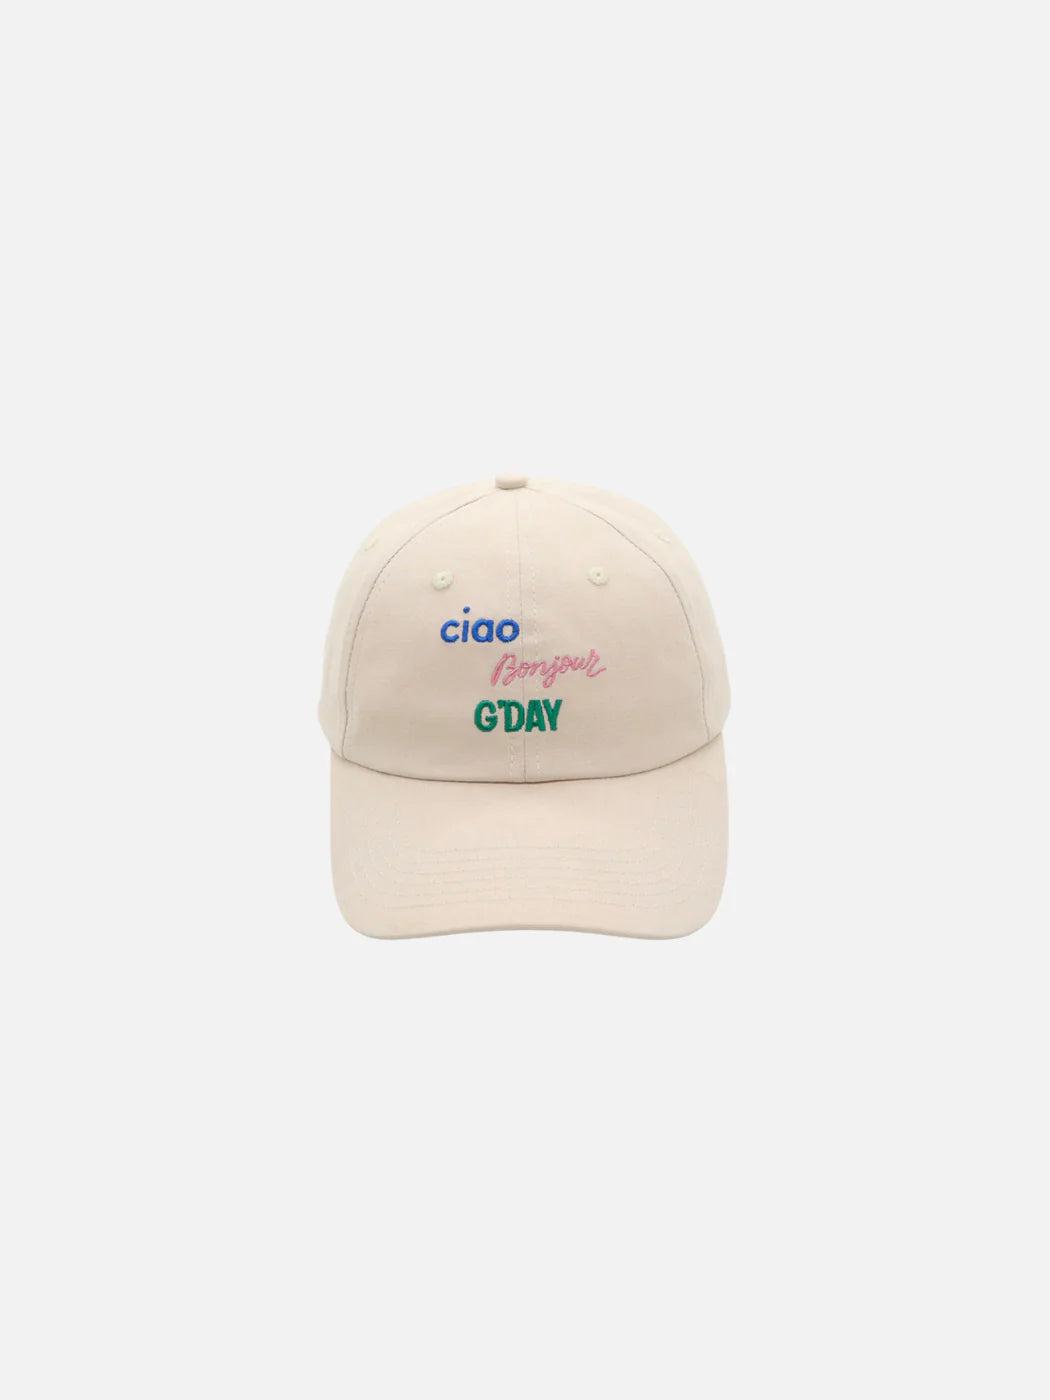 G'DAY DAD CAP